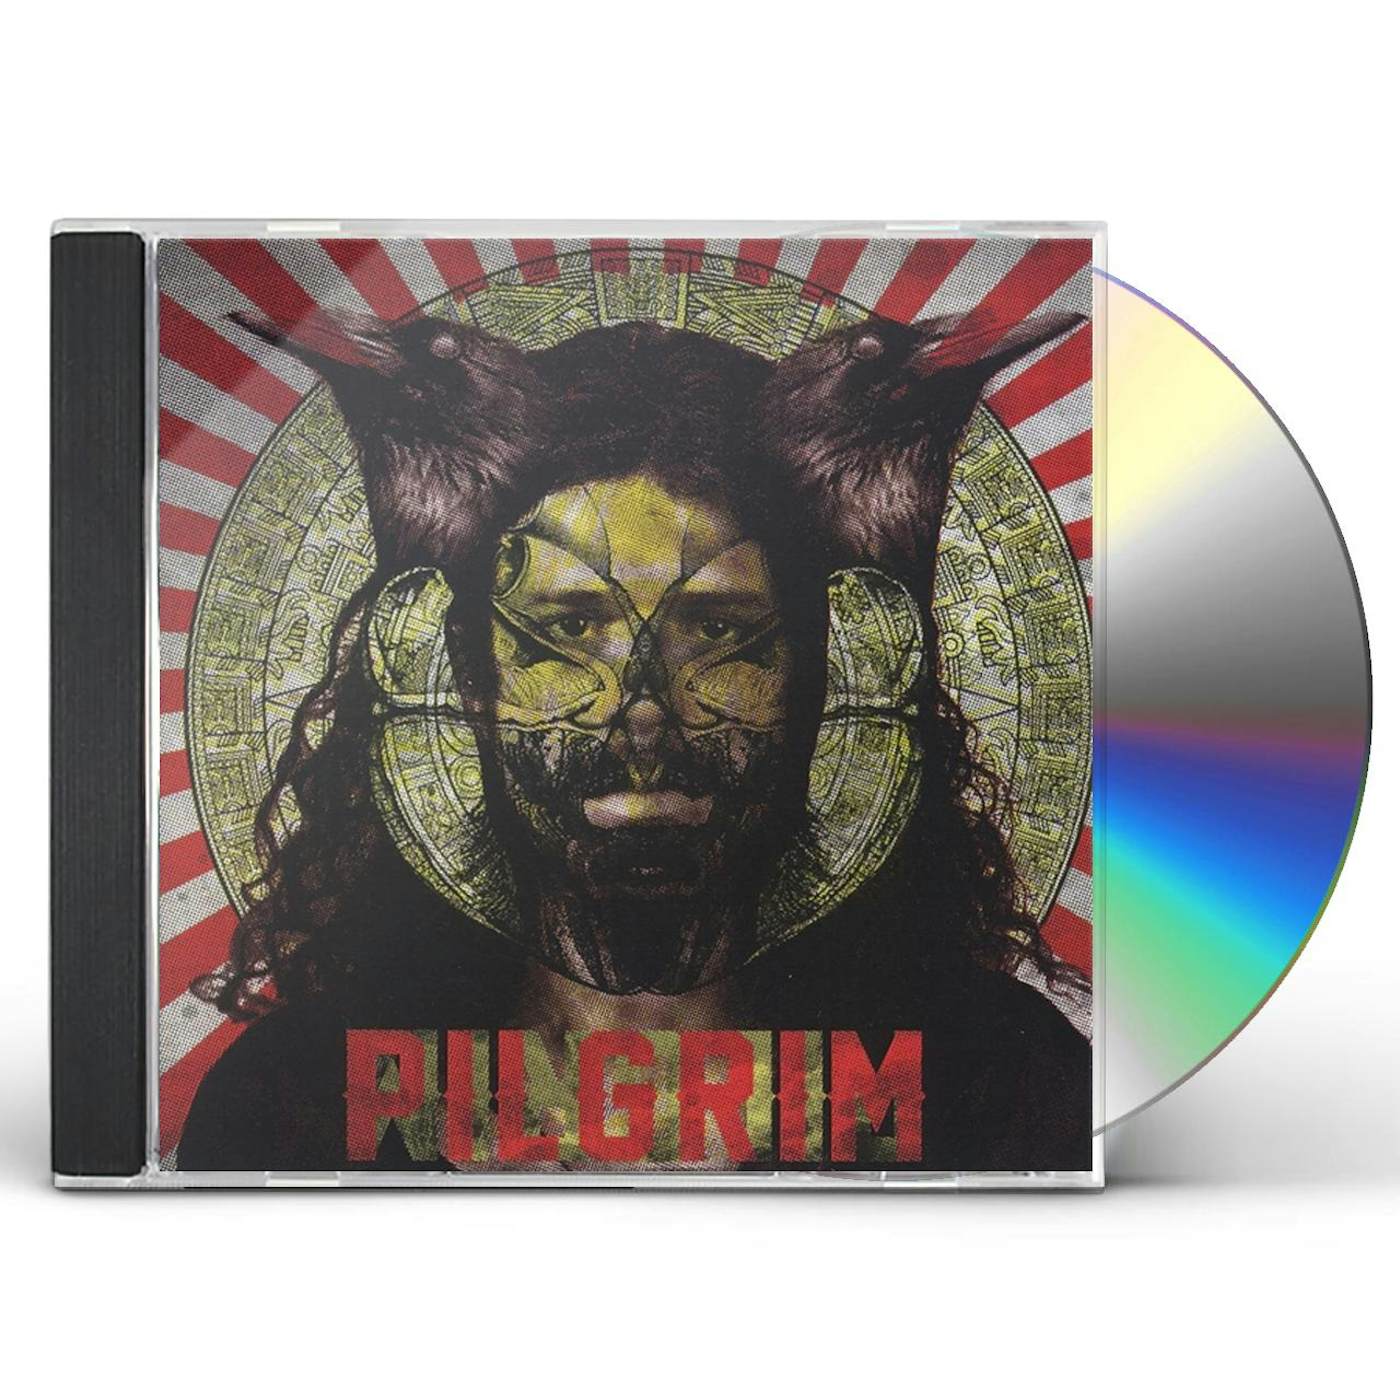 The Pilgrim CD